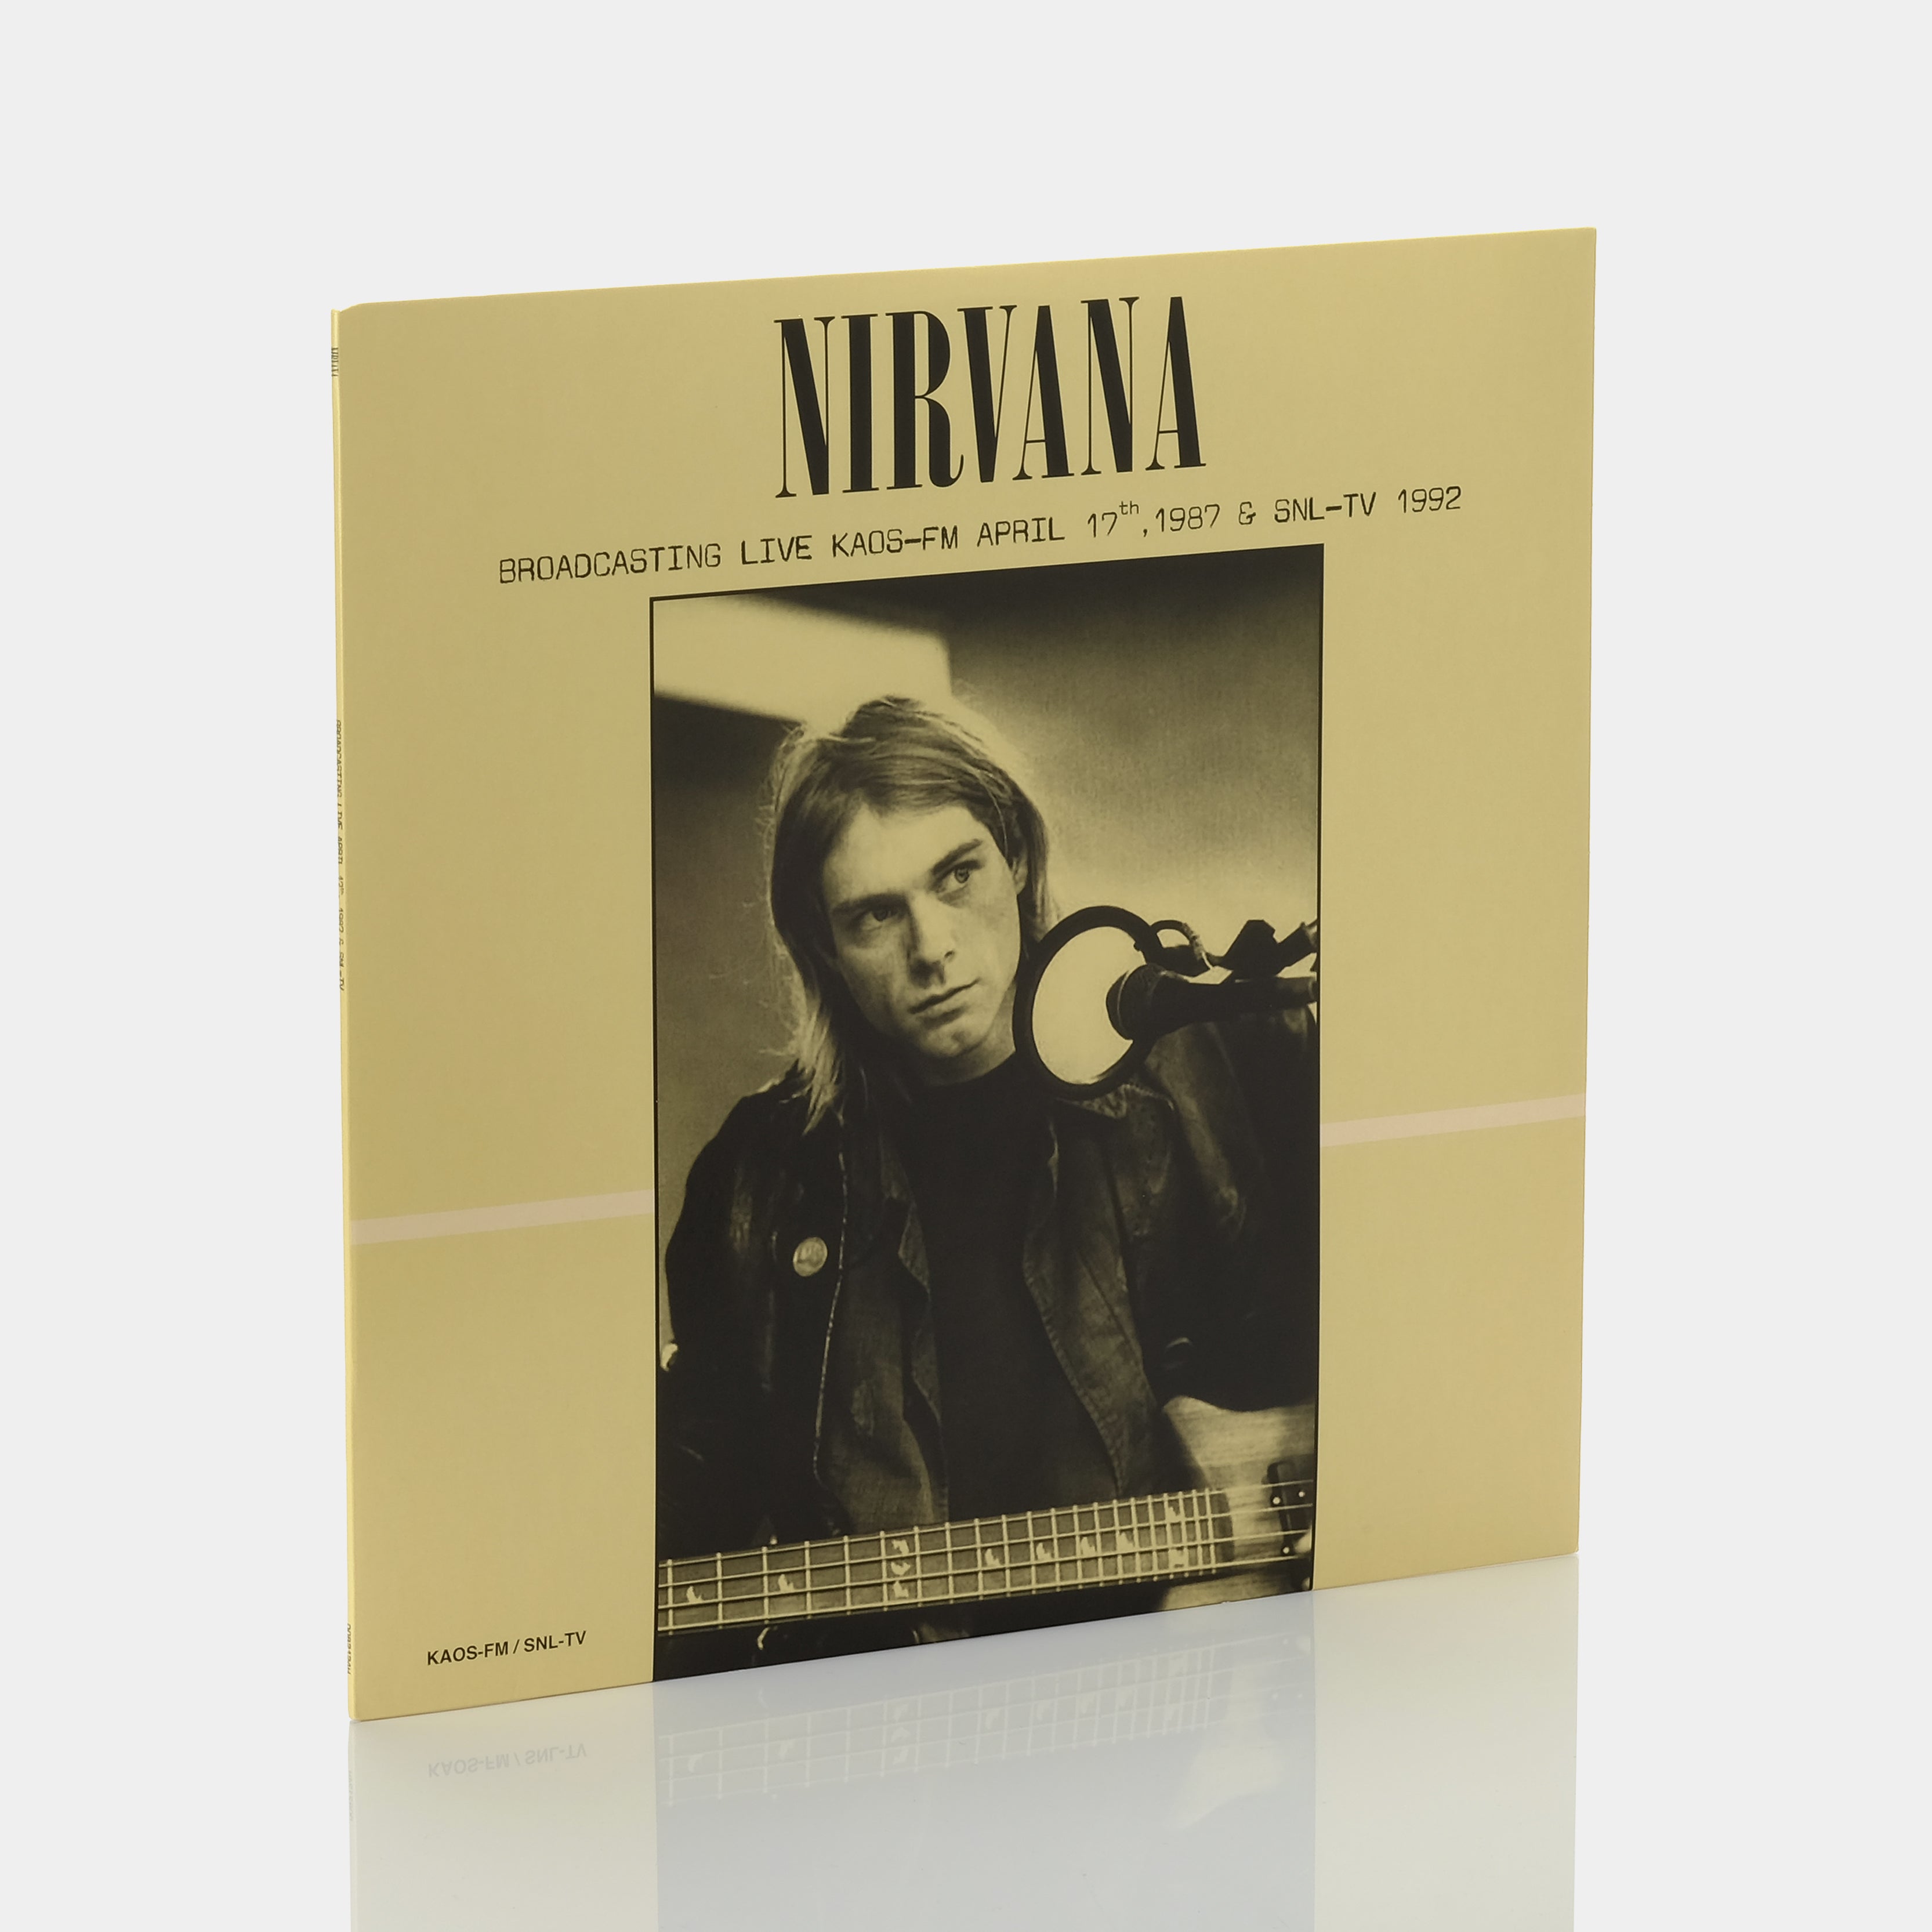 Nirvana - Broadcasting Live KAOS-FM April 17, 1987 & SNL-TV 1992 LP Green Vinyl Record